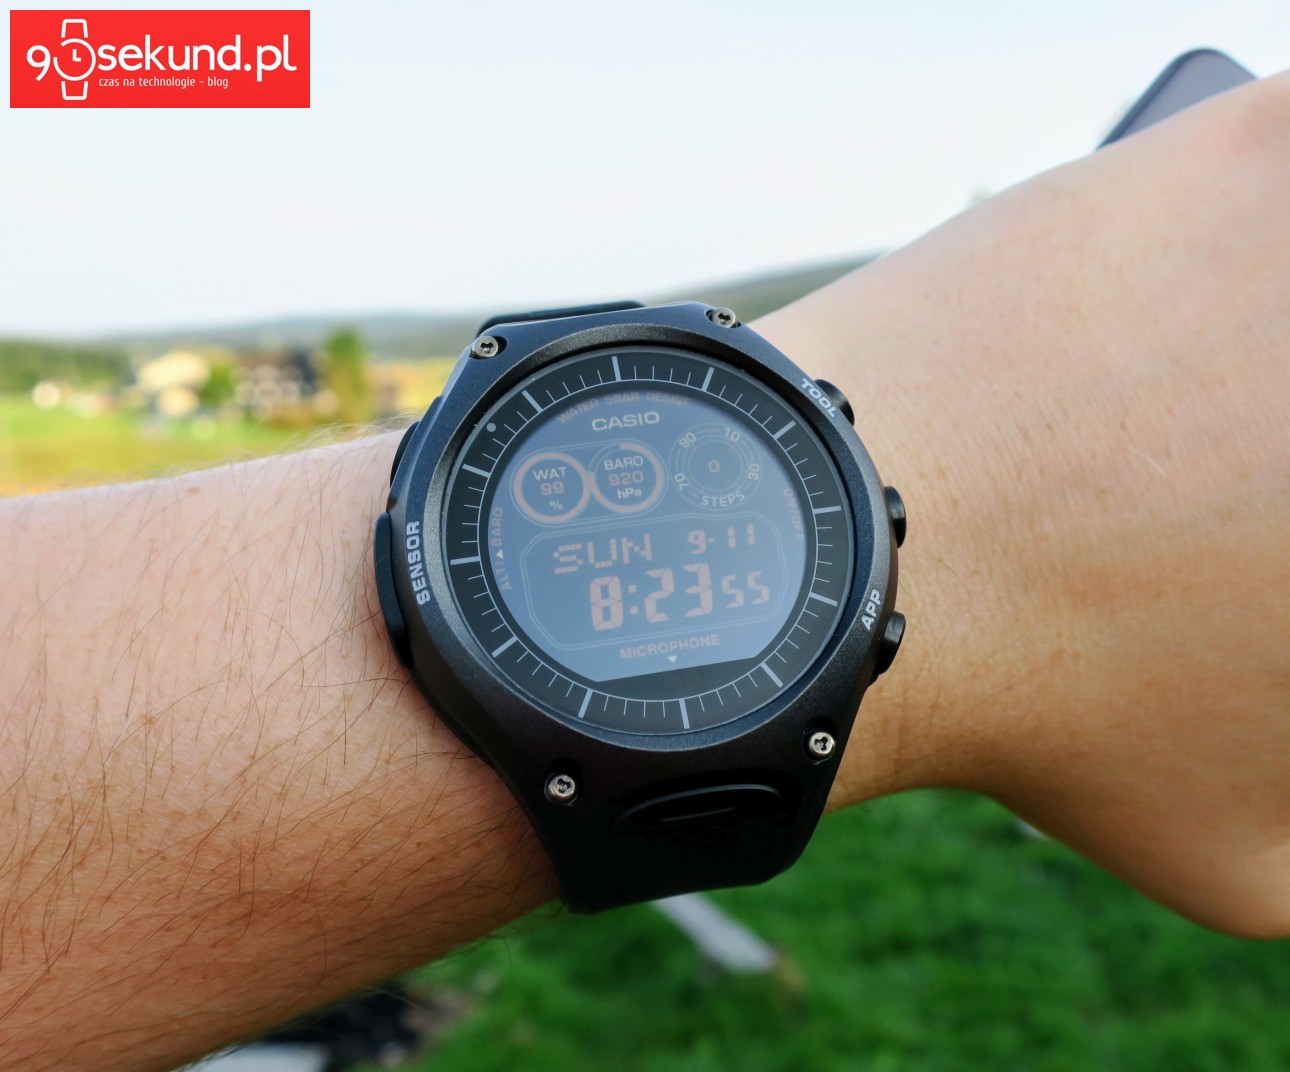 Recenzja Casio Smart Outdoor Watch WSD-F10 - 90sekund.pl